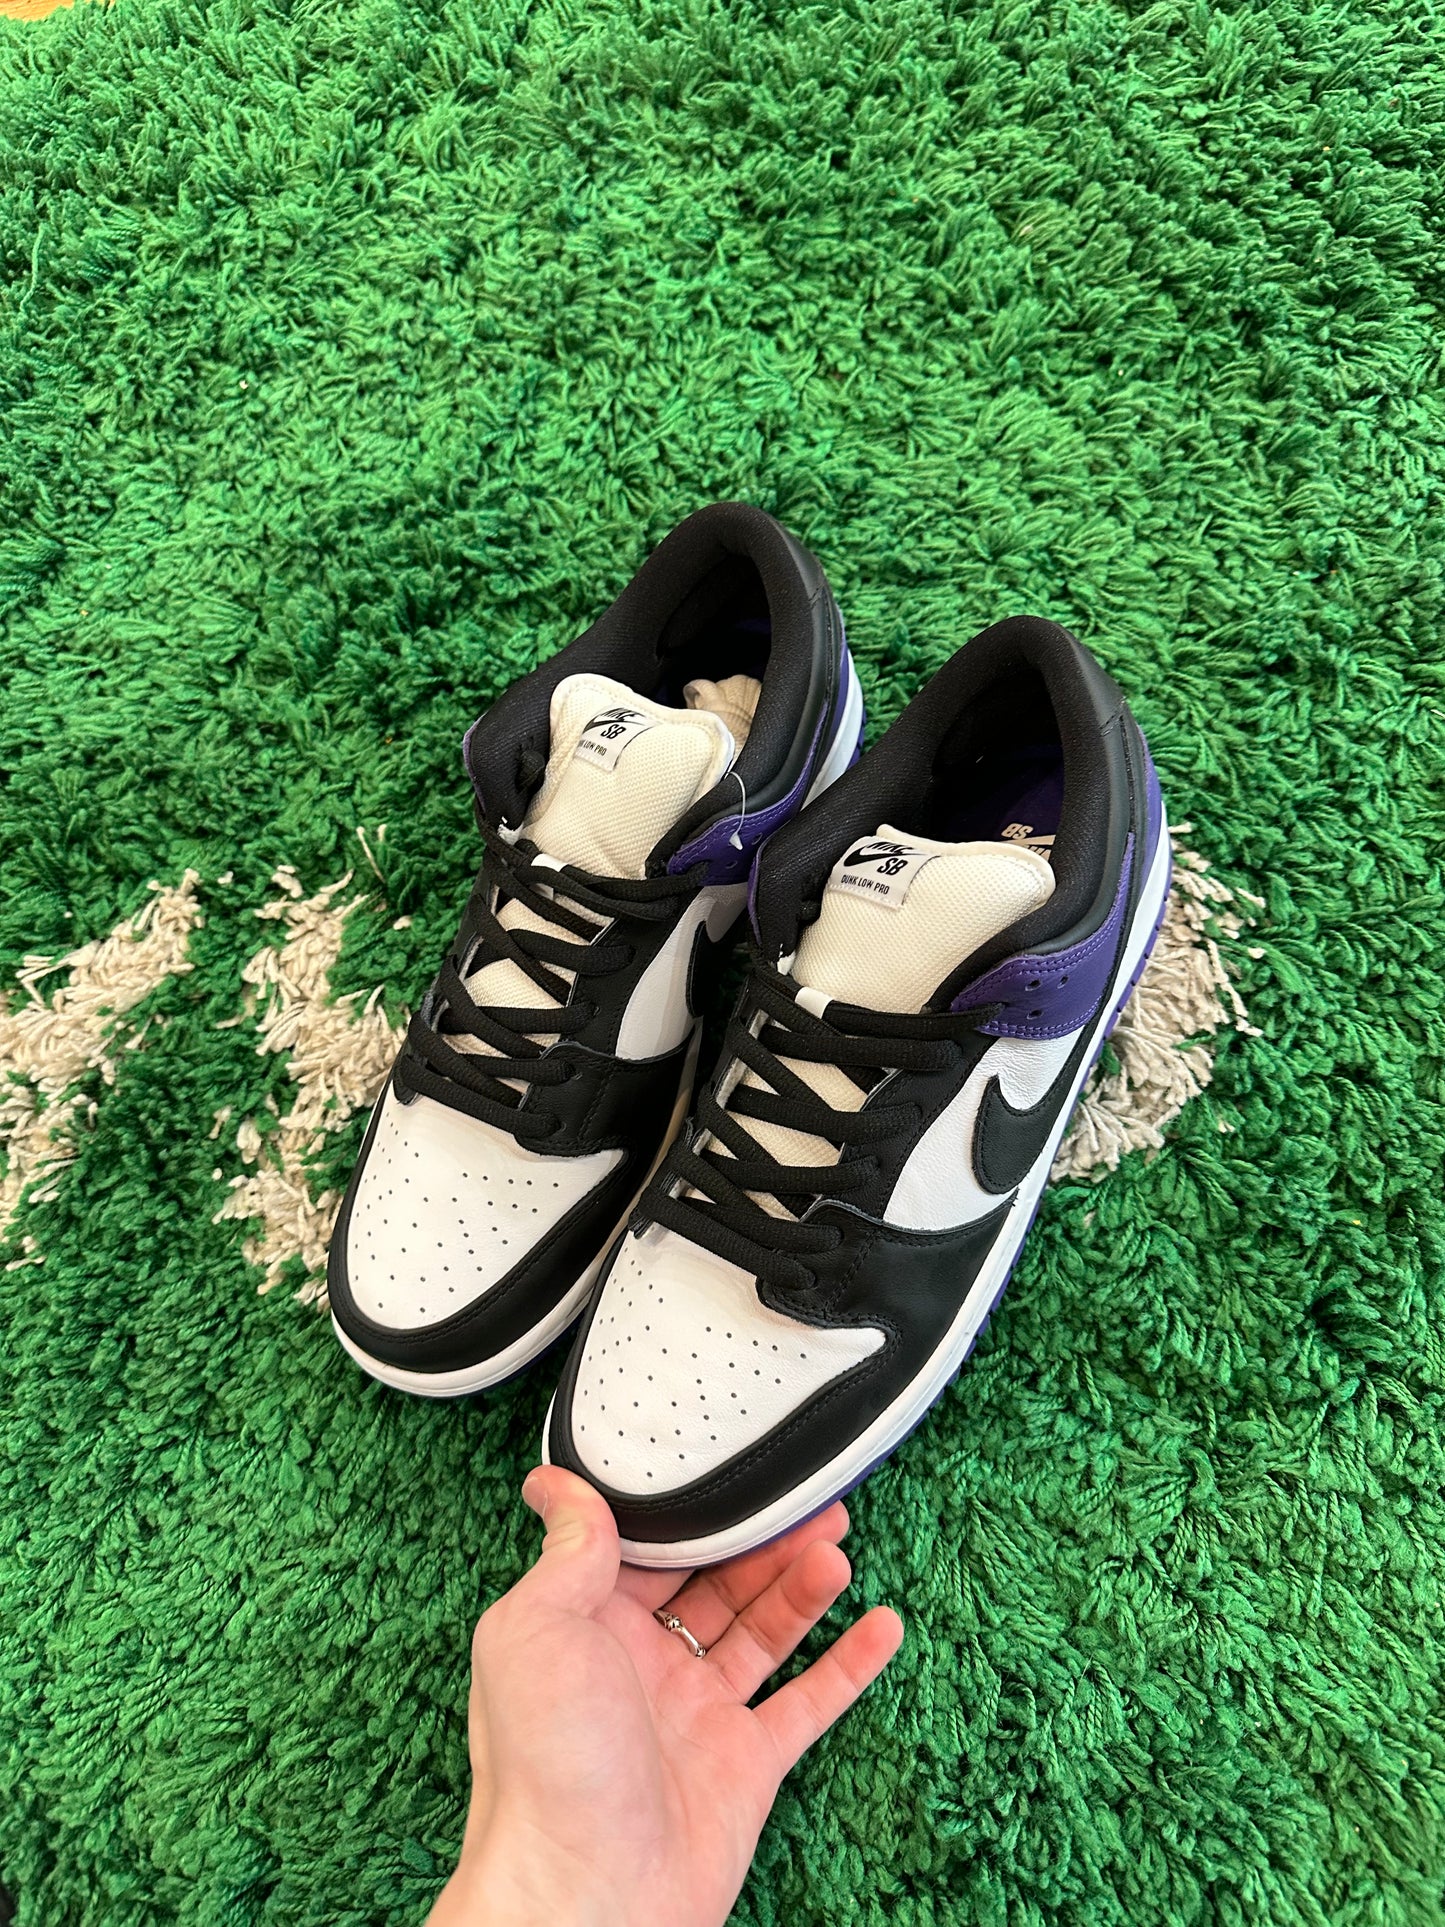 Nike SB Dunk Low “Court Purple”